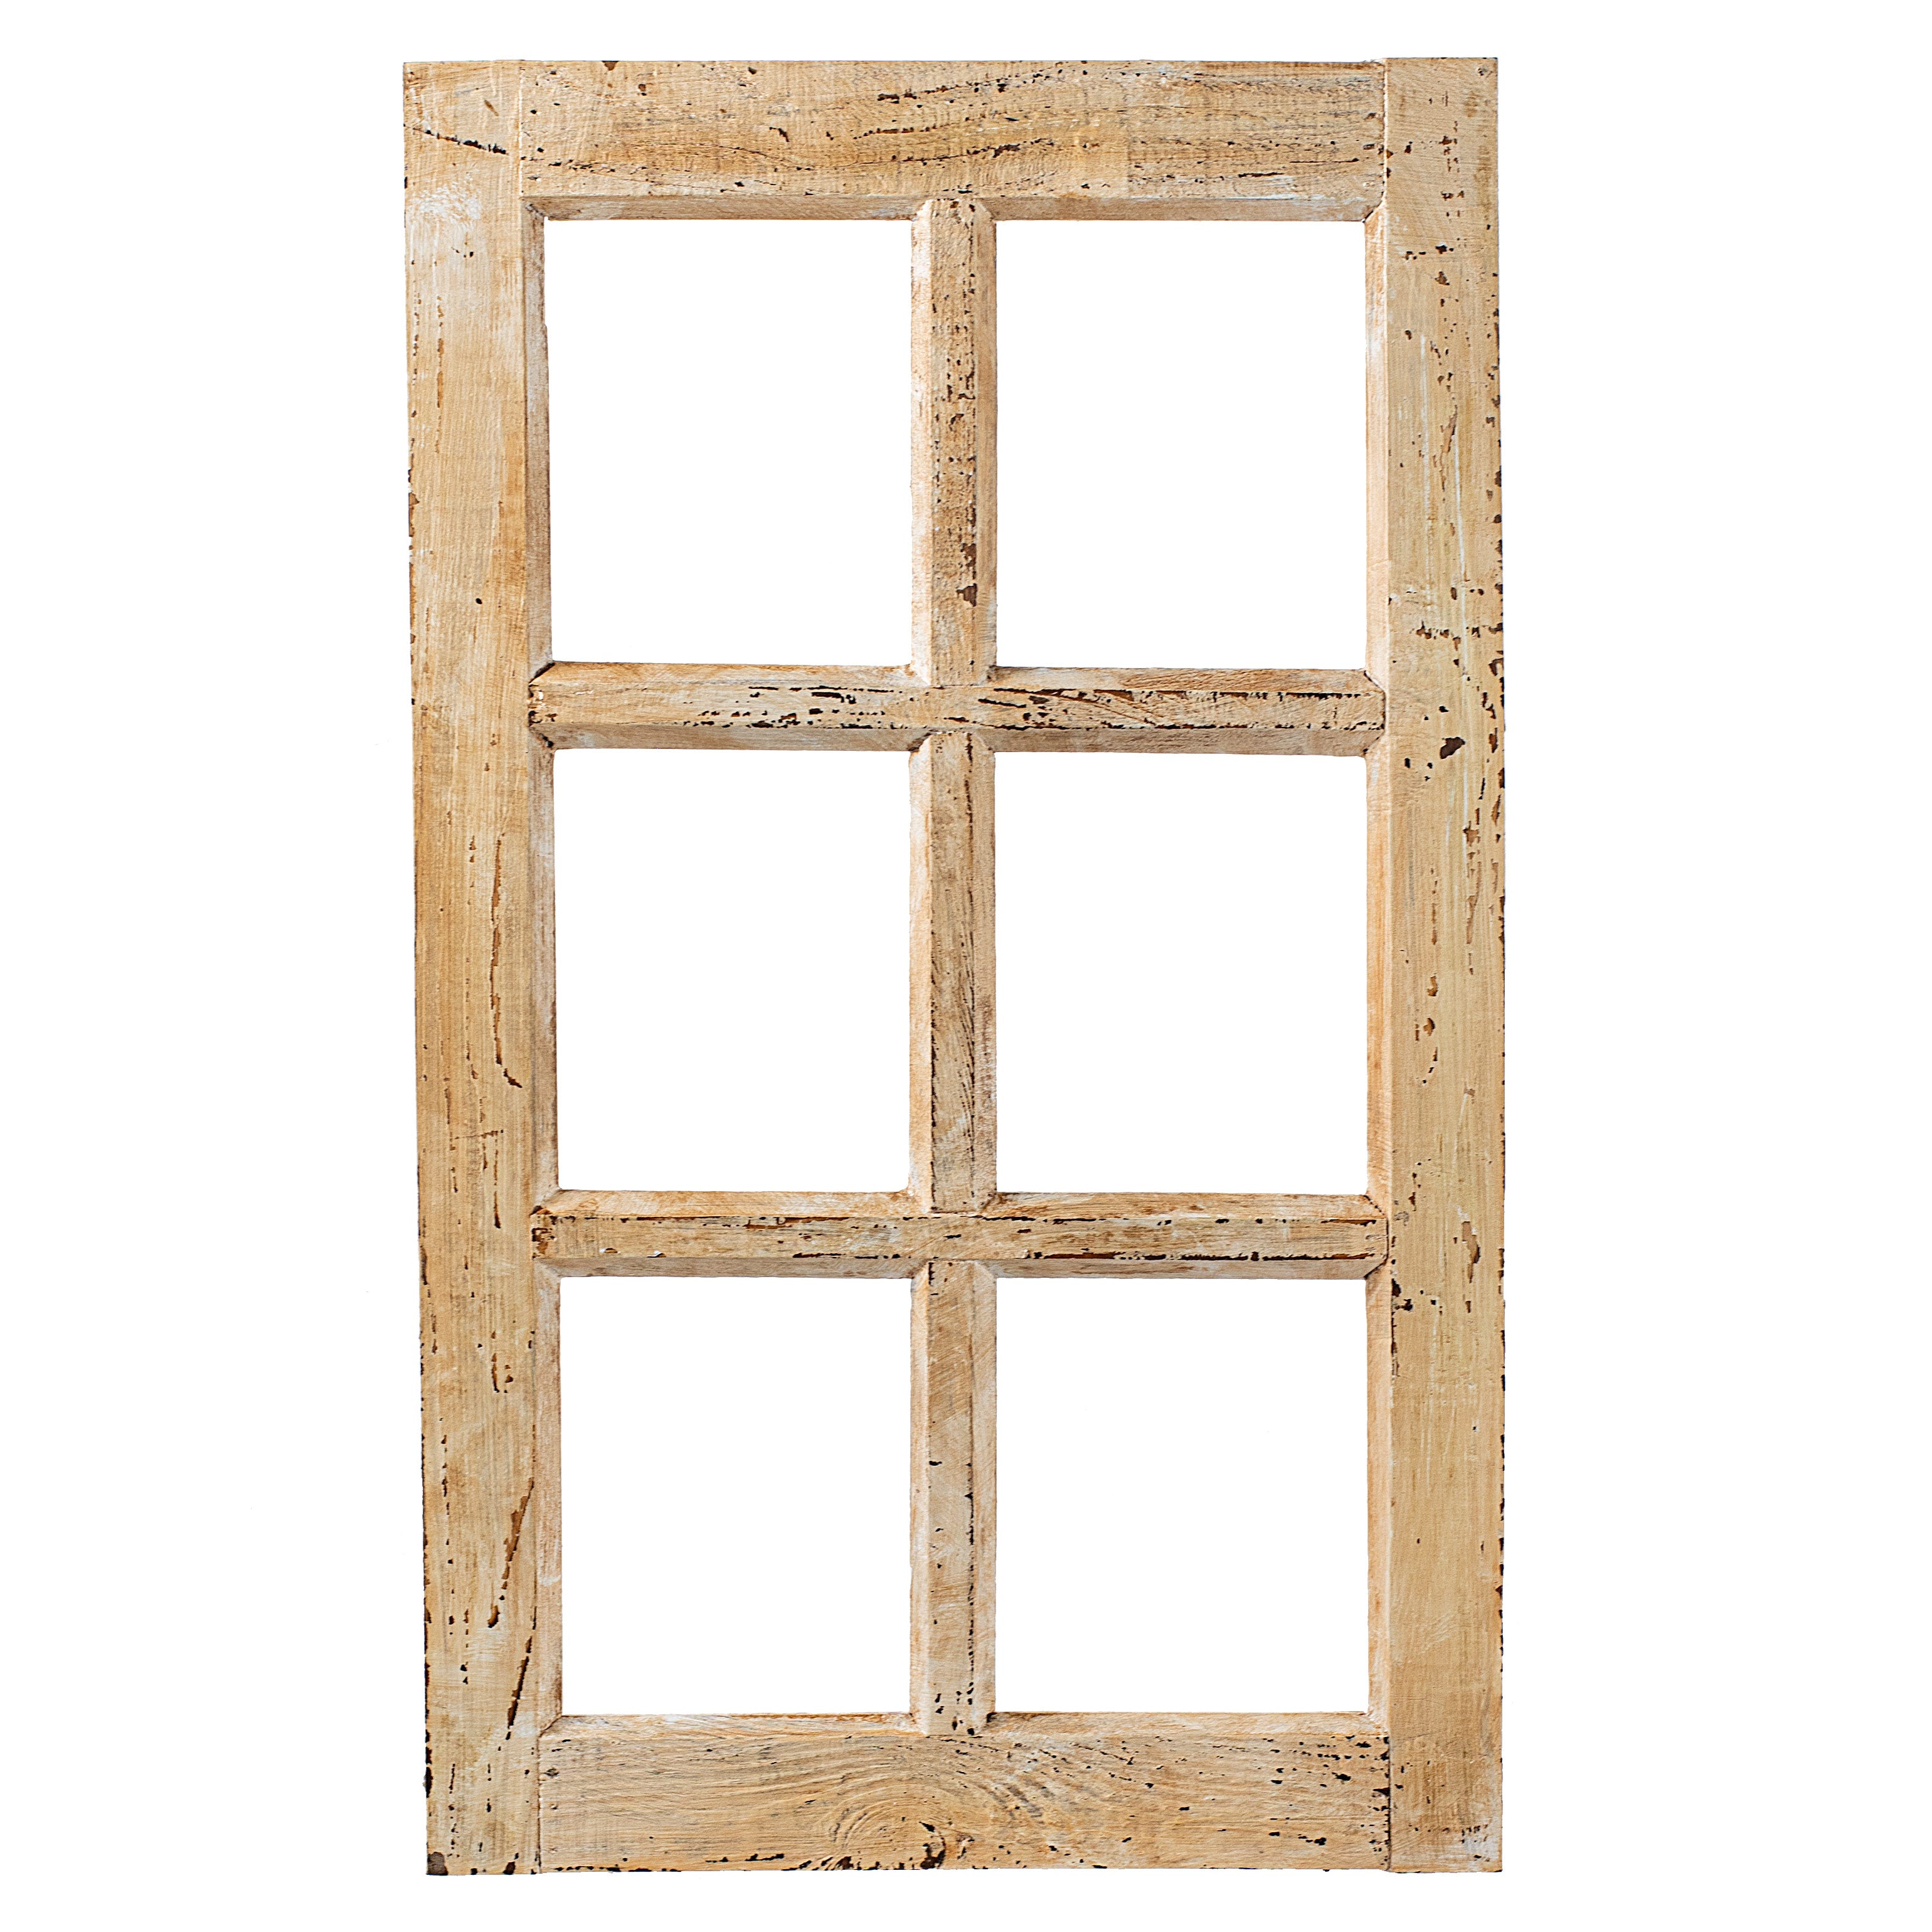 20" Decorative Wood Window: Antique Beige